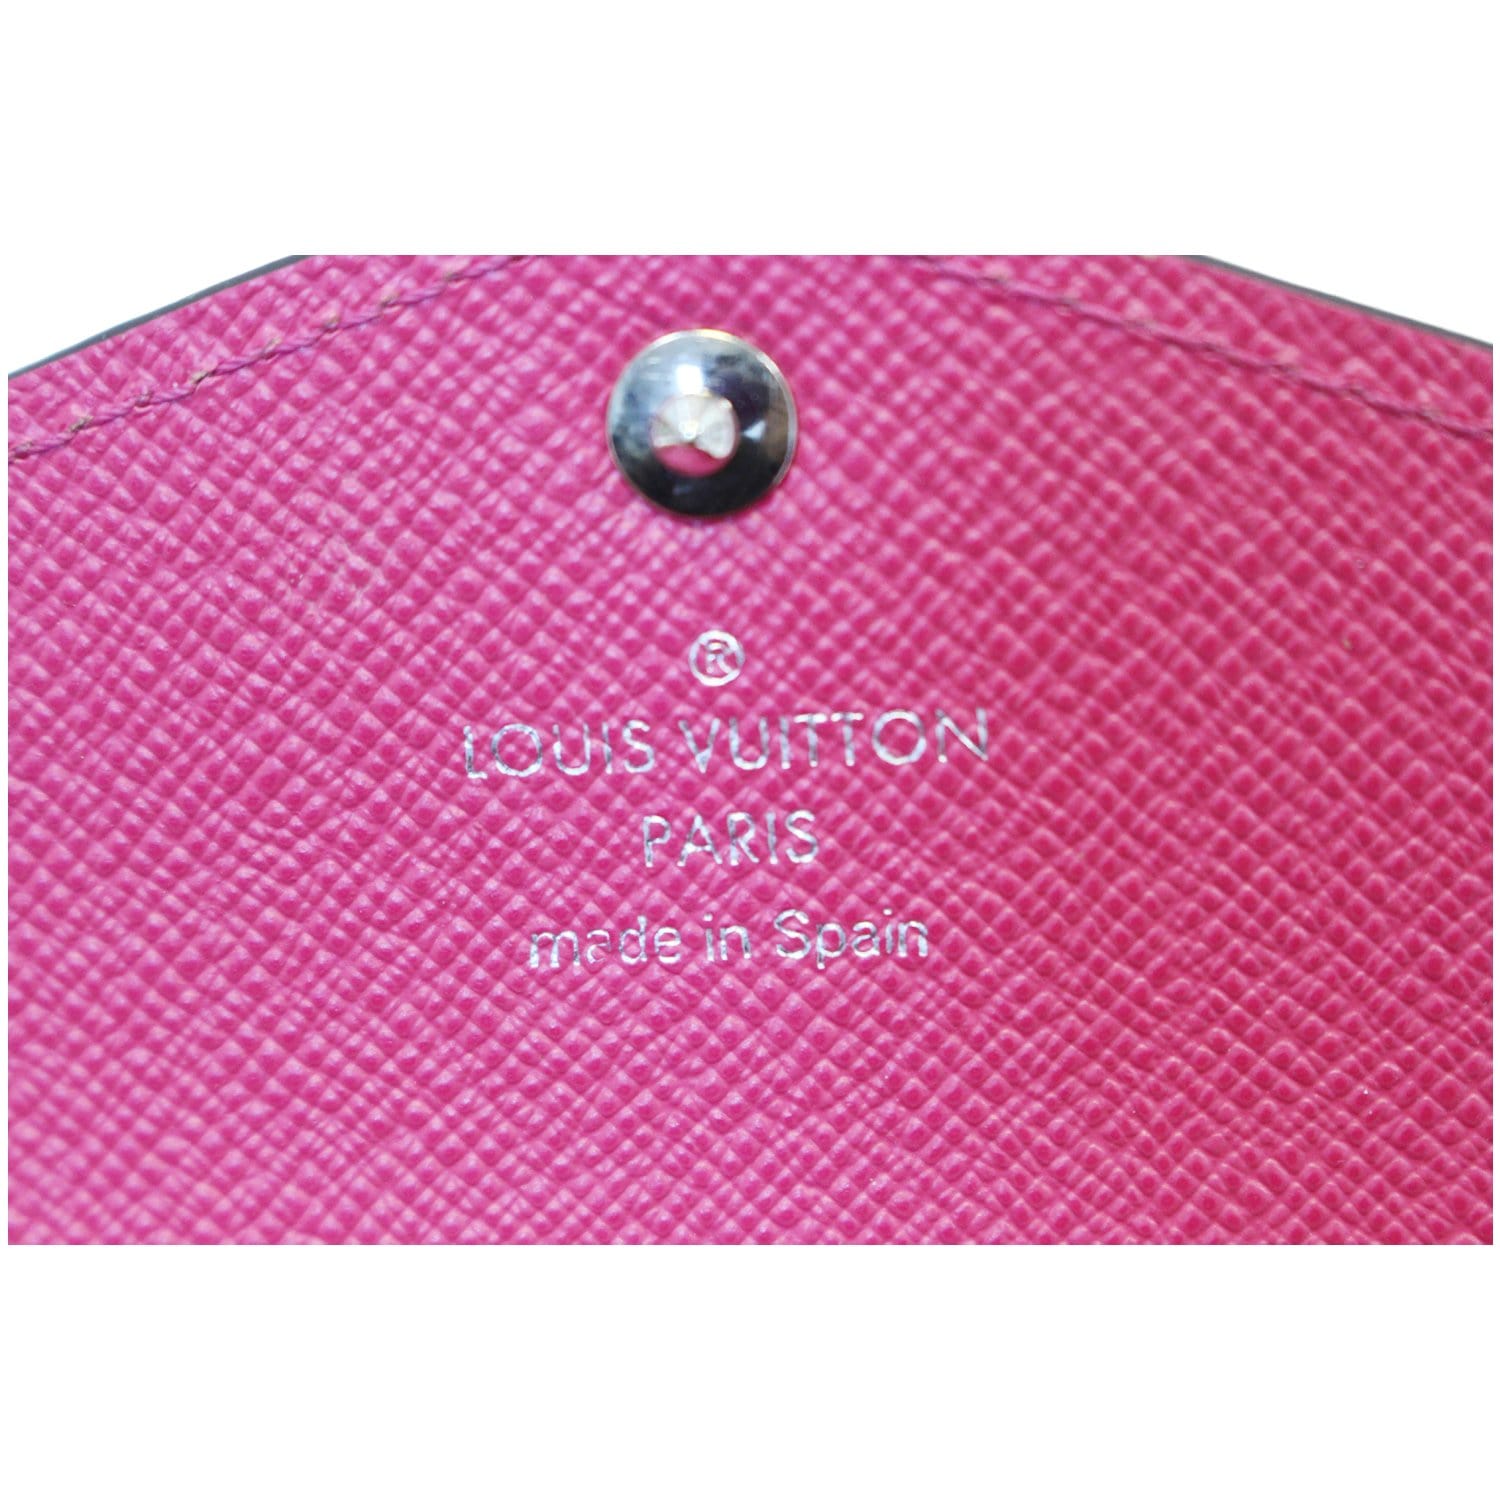 LOUIS VUITTON Sarah Monogram Vernis Leather Chain Wallet Light Pink